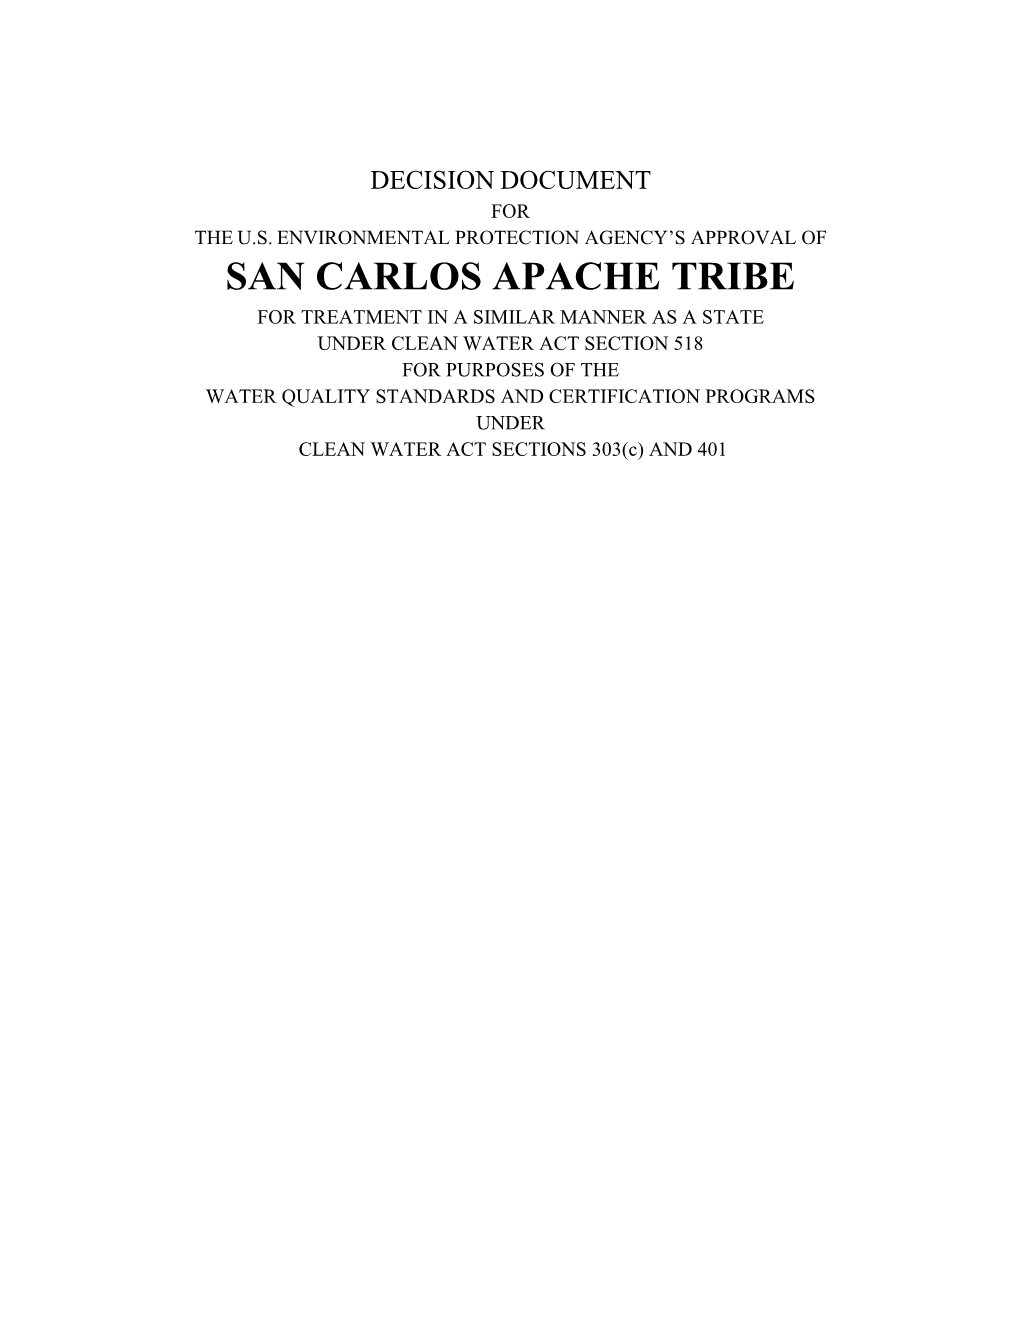 San Carlos Apache Tribe